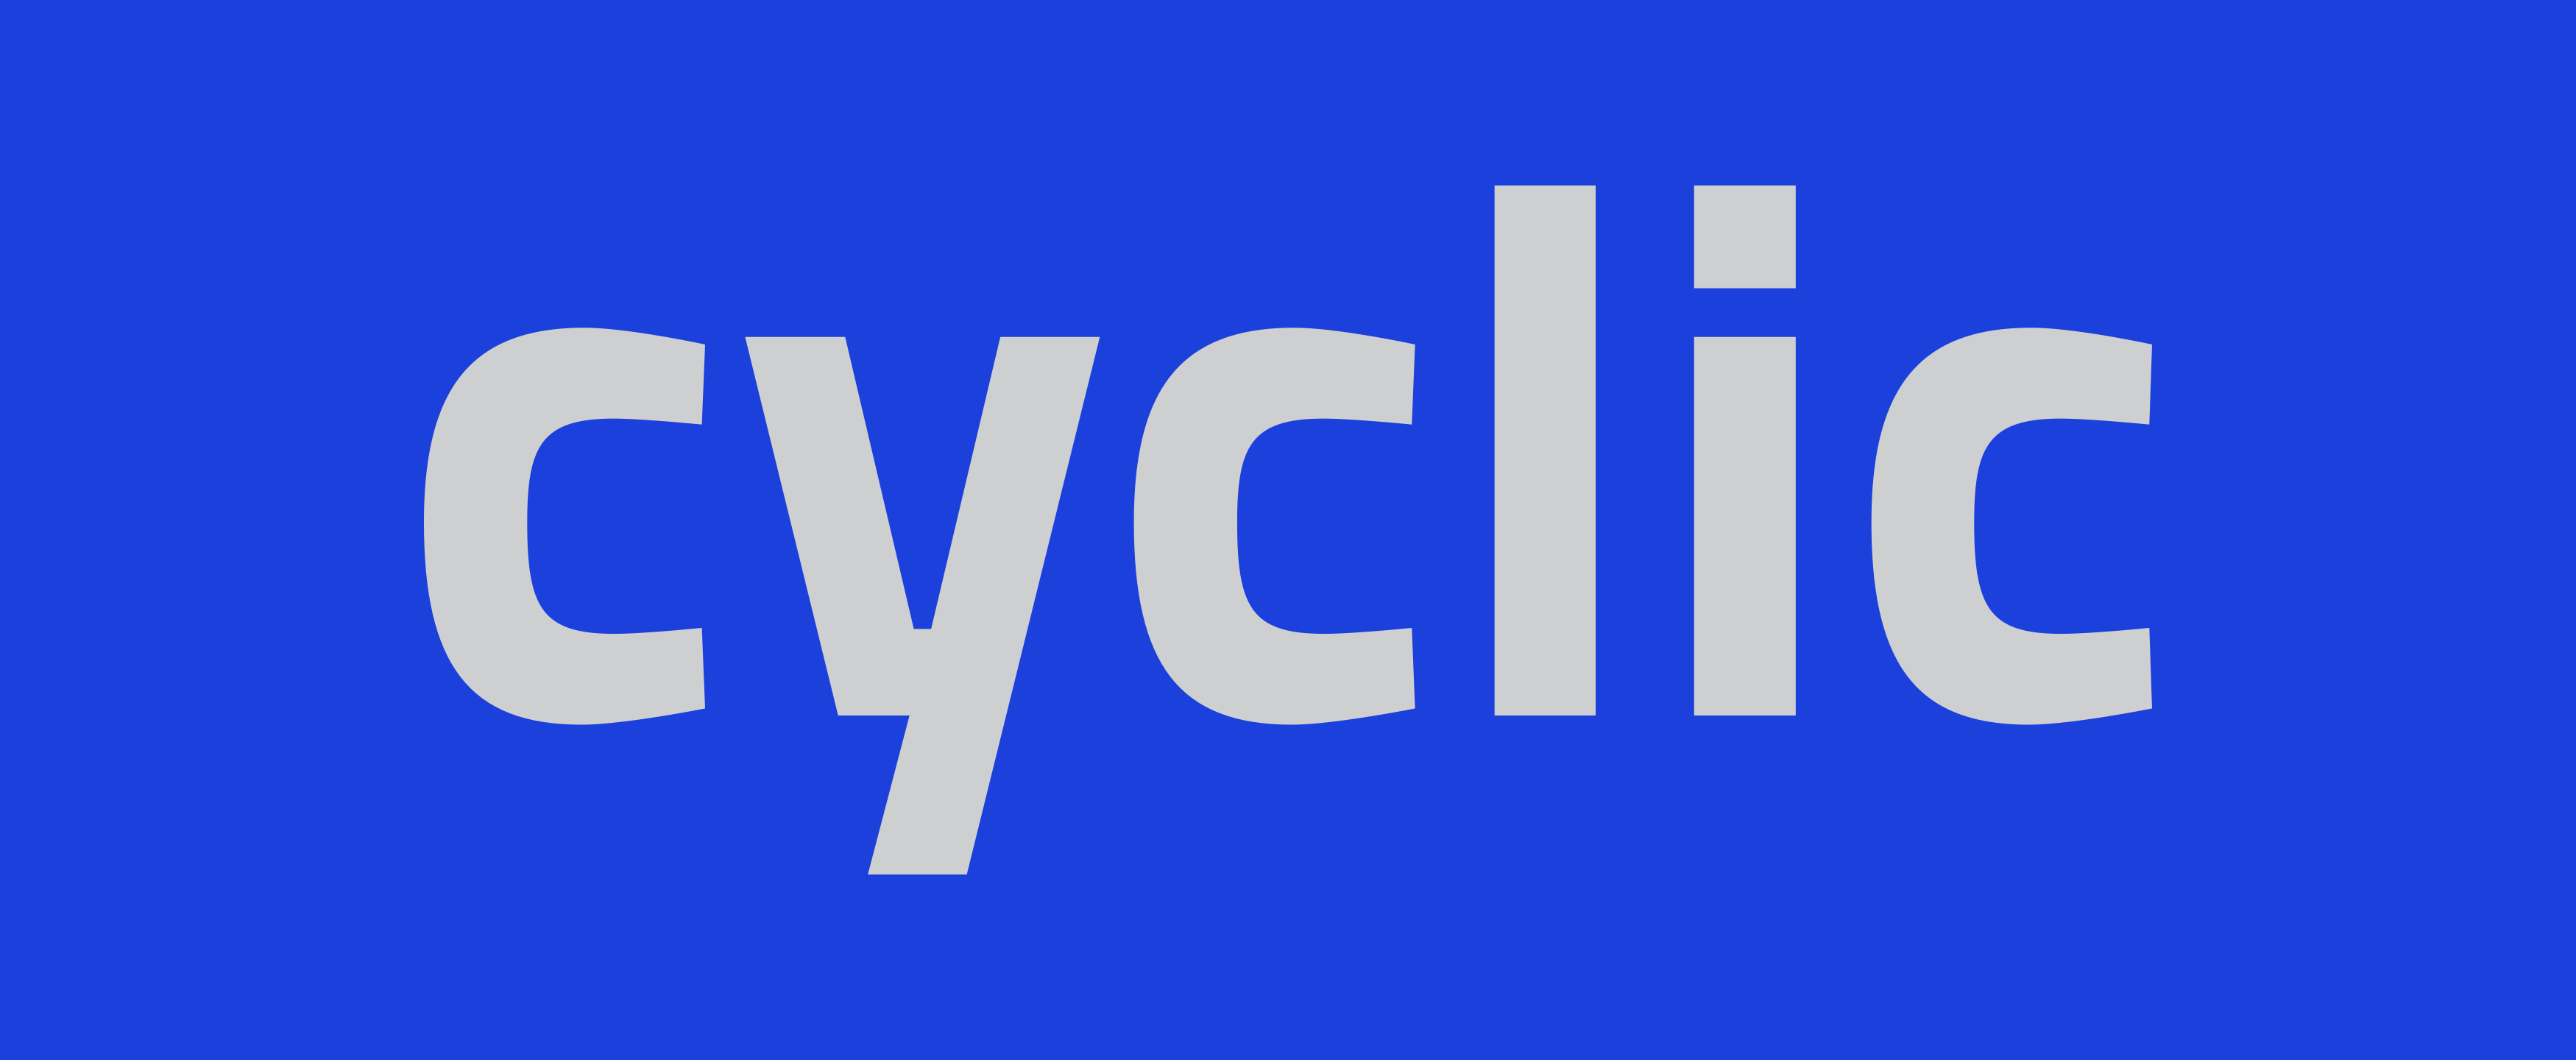 Why I Started Cyclic